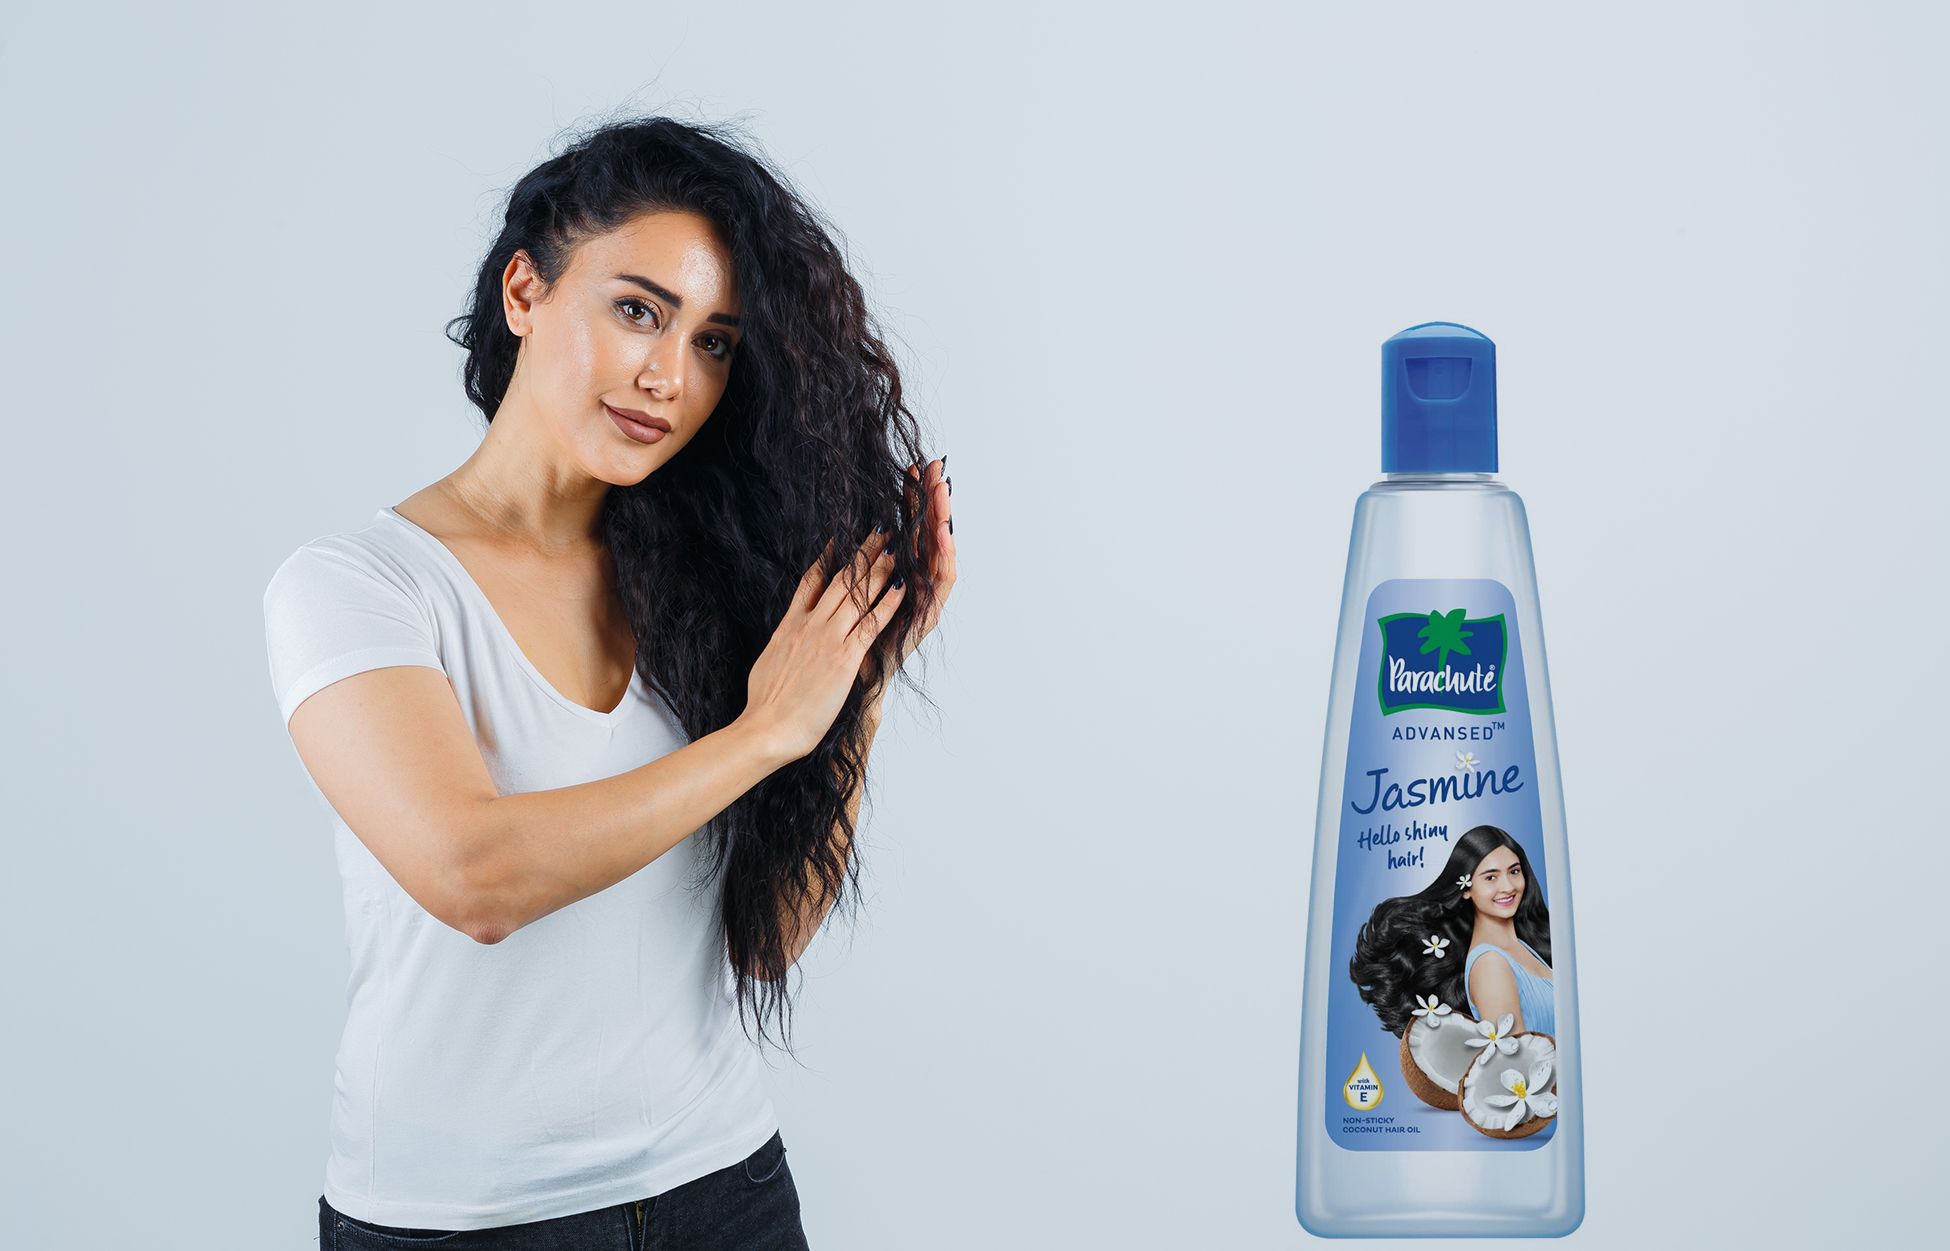 A happy woman oiling her hair with Parachute Advansed Jasmine Hair Oil